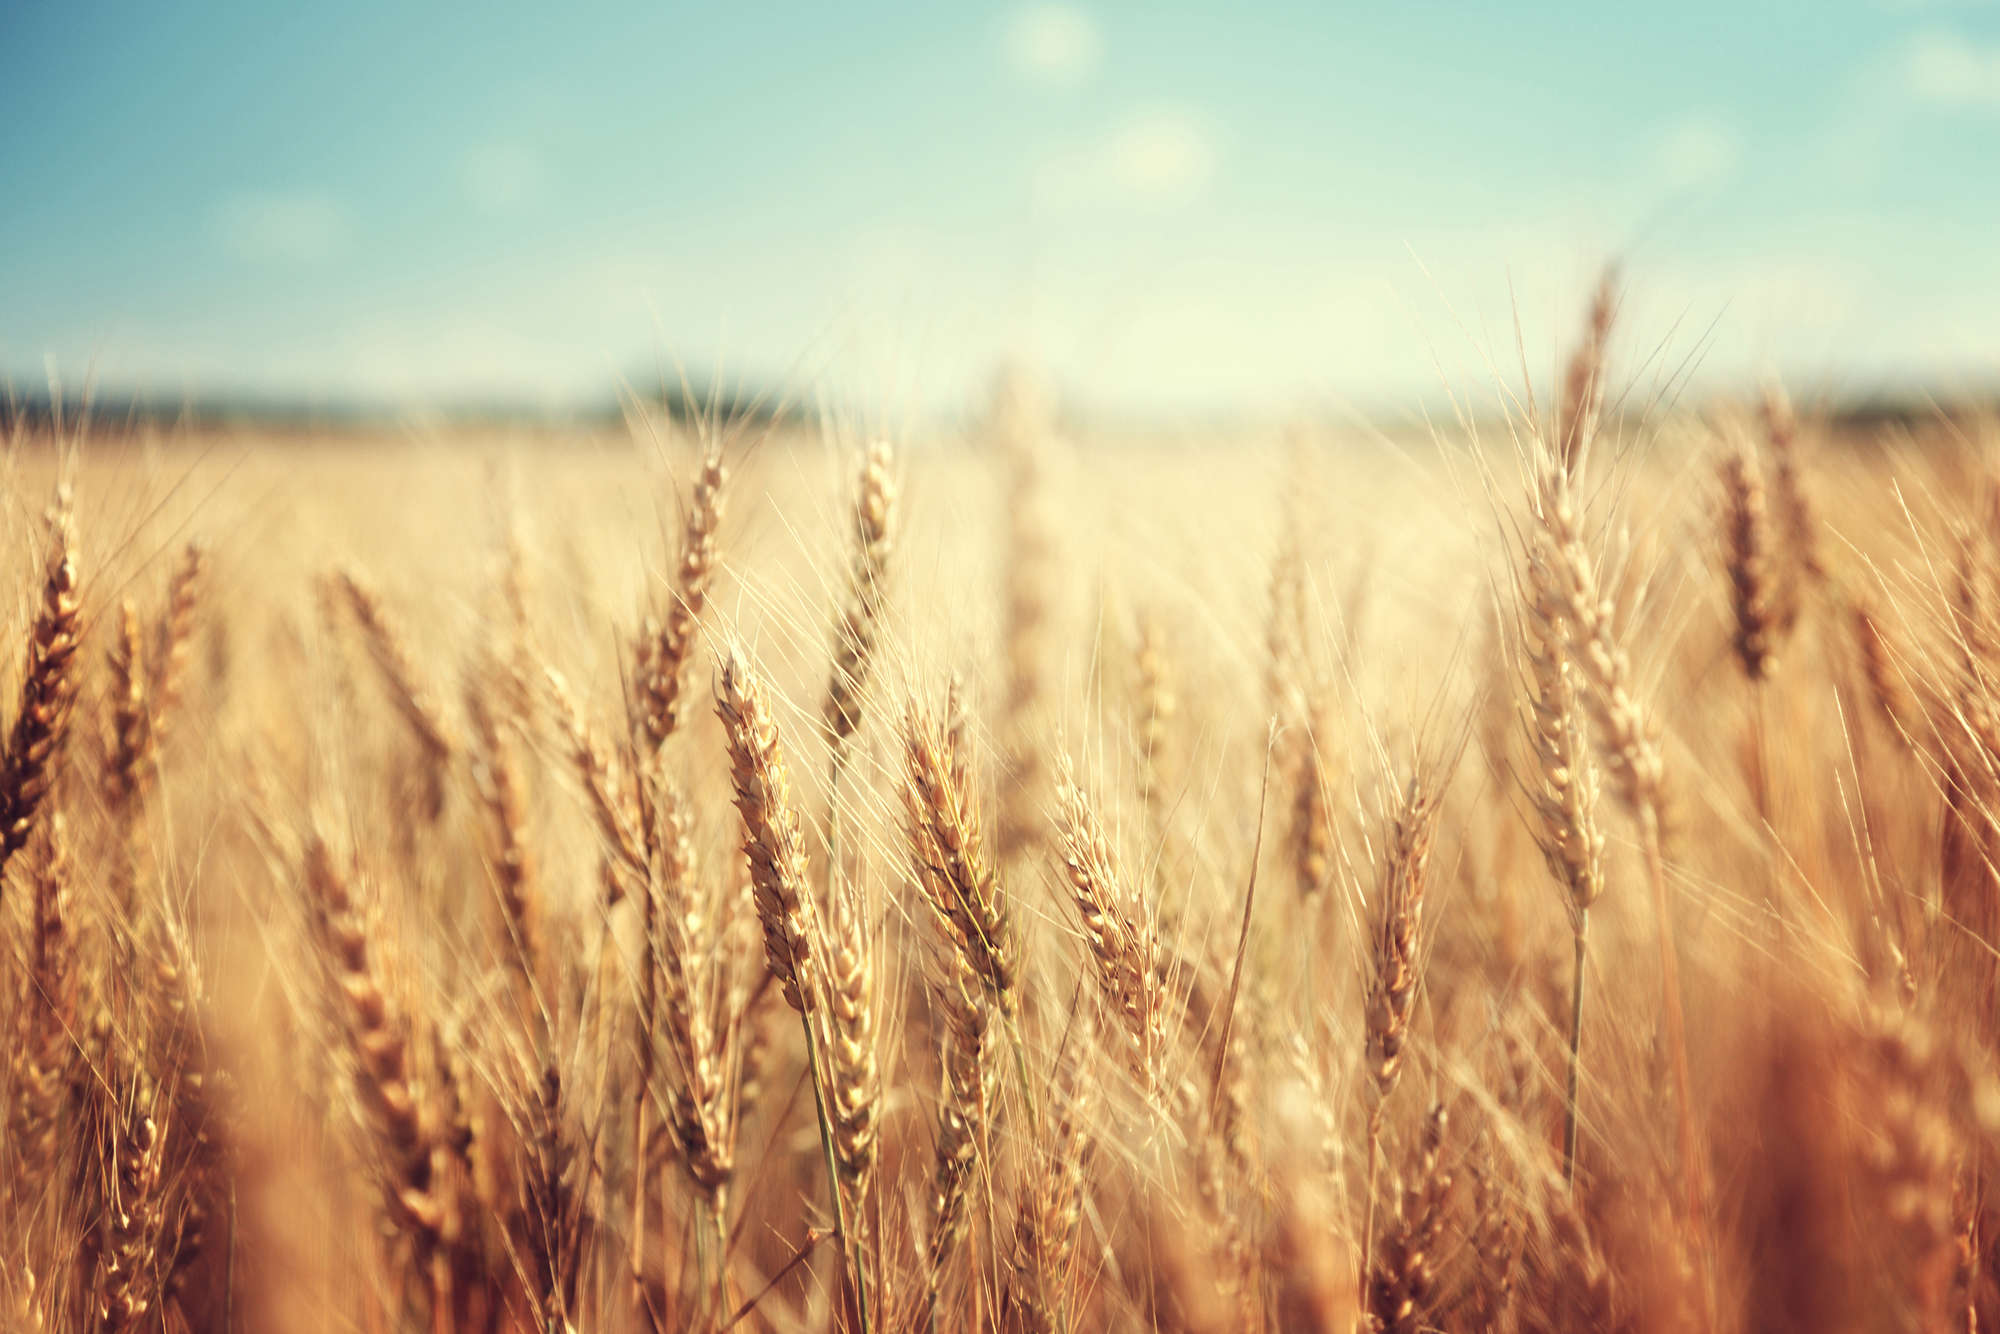             Plants mural wheat field on premium smooth fleece
        